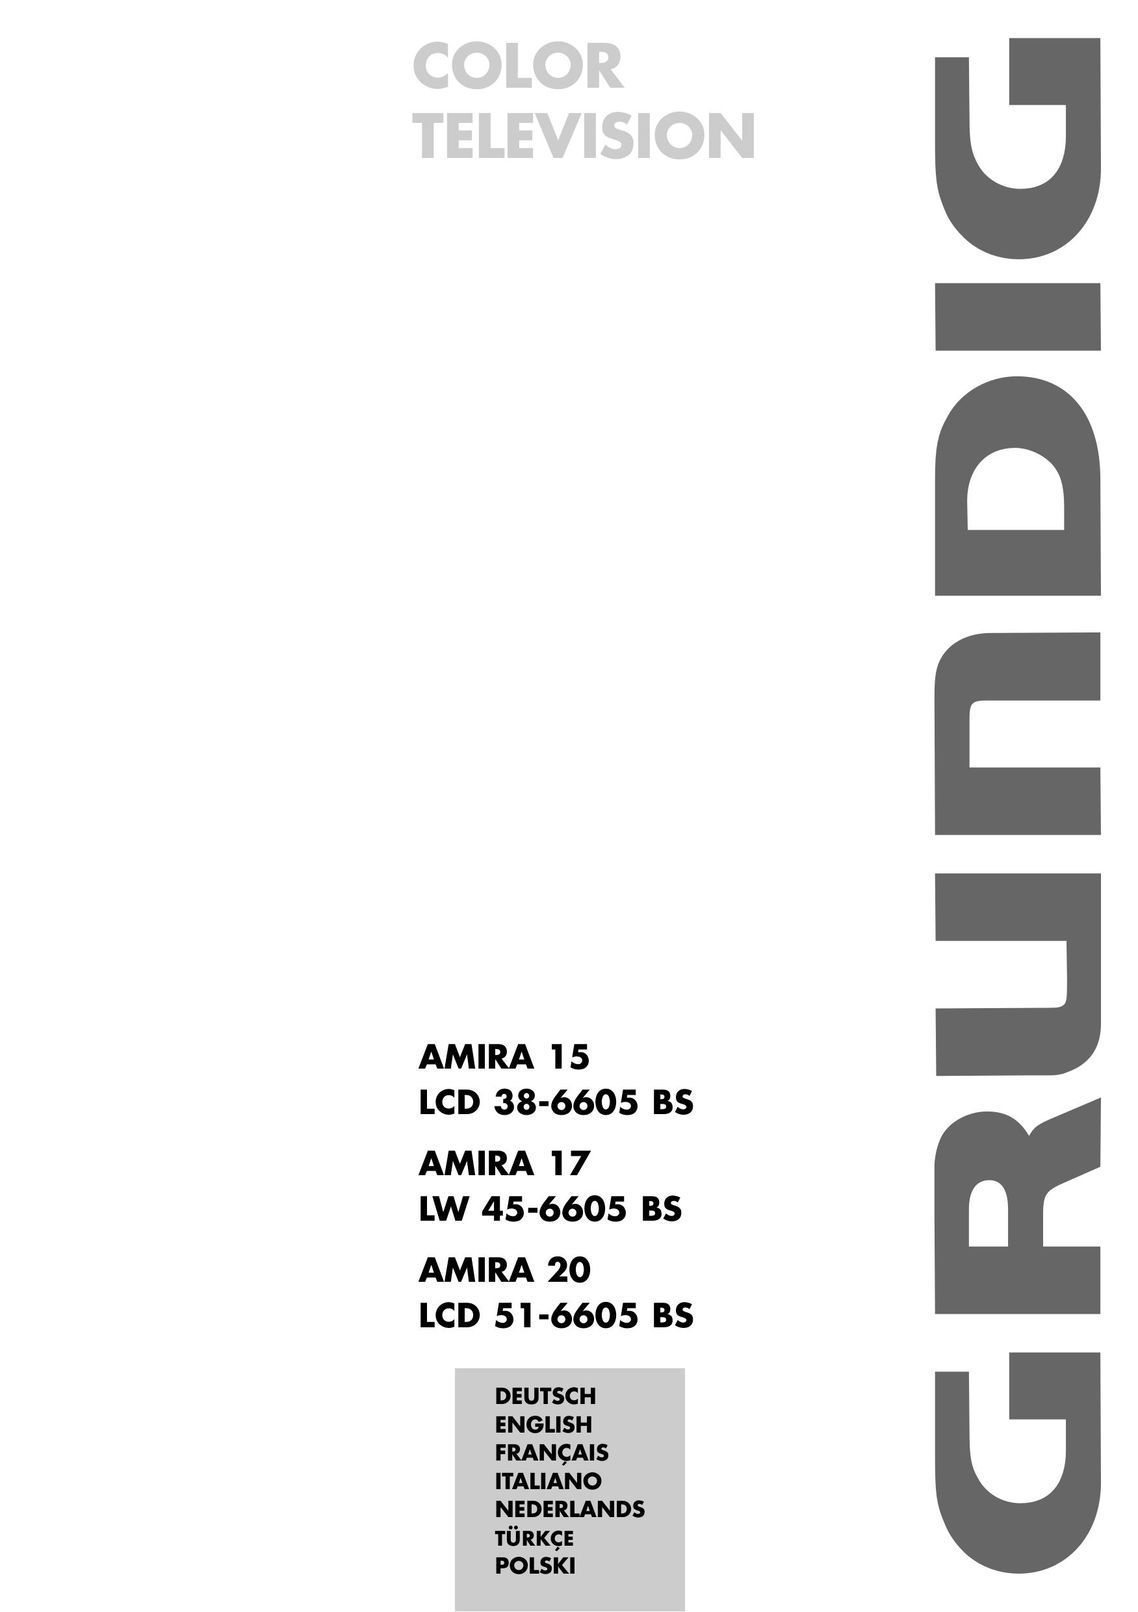 Grundig LW 45-6605 BS CRT Television User Manual